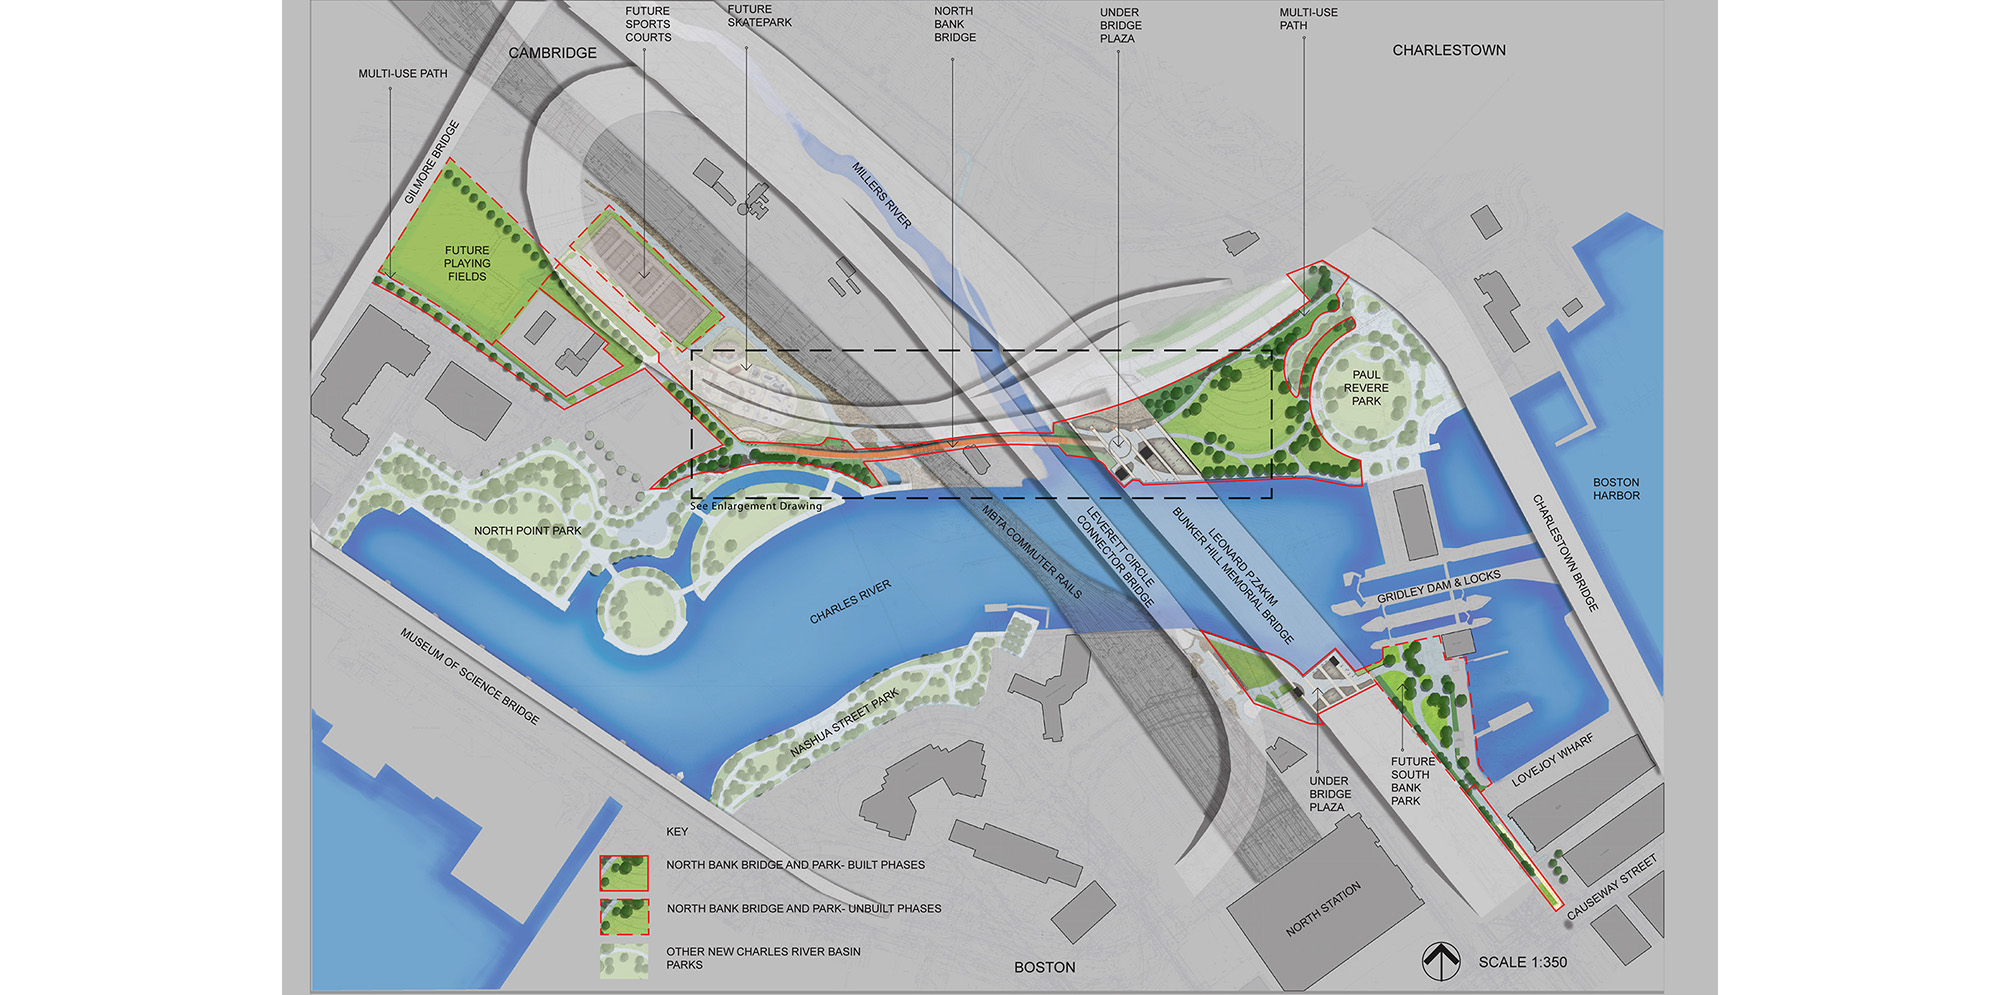 North Bank Bridge rendering. For full text, download project PDF below.